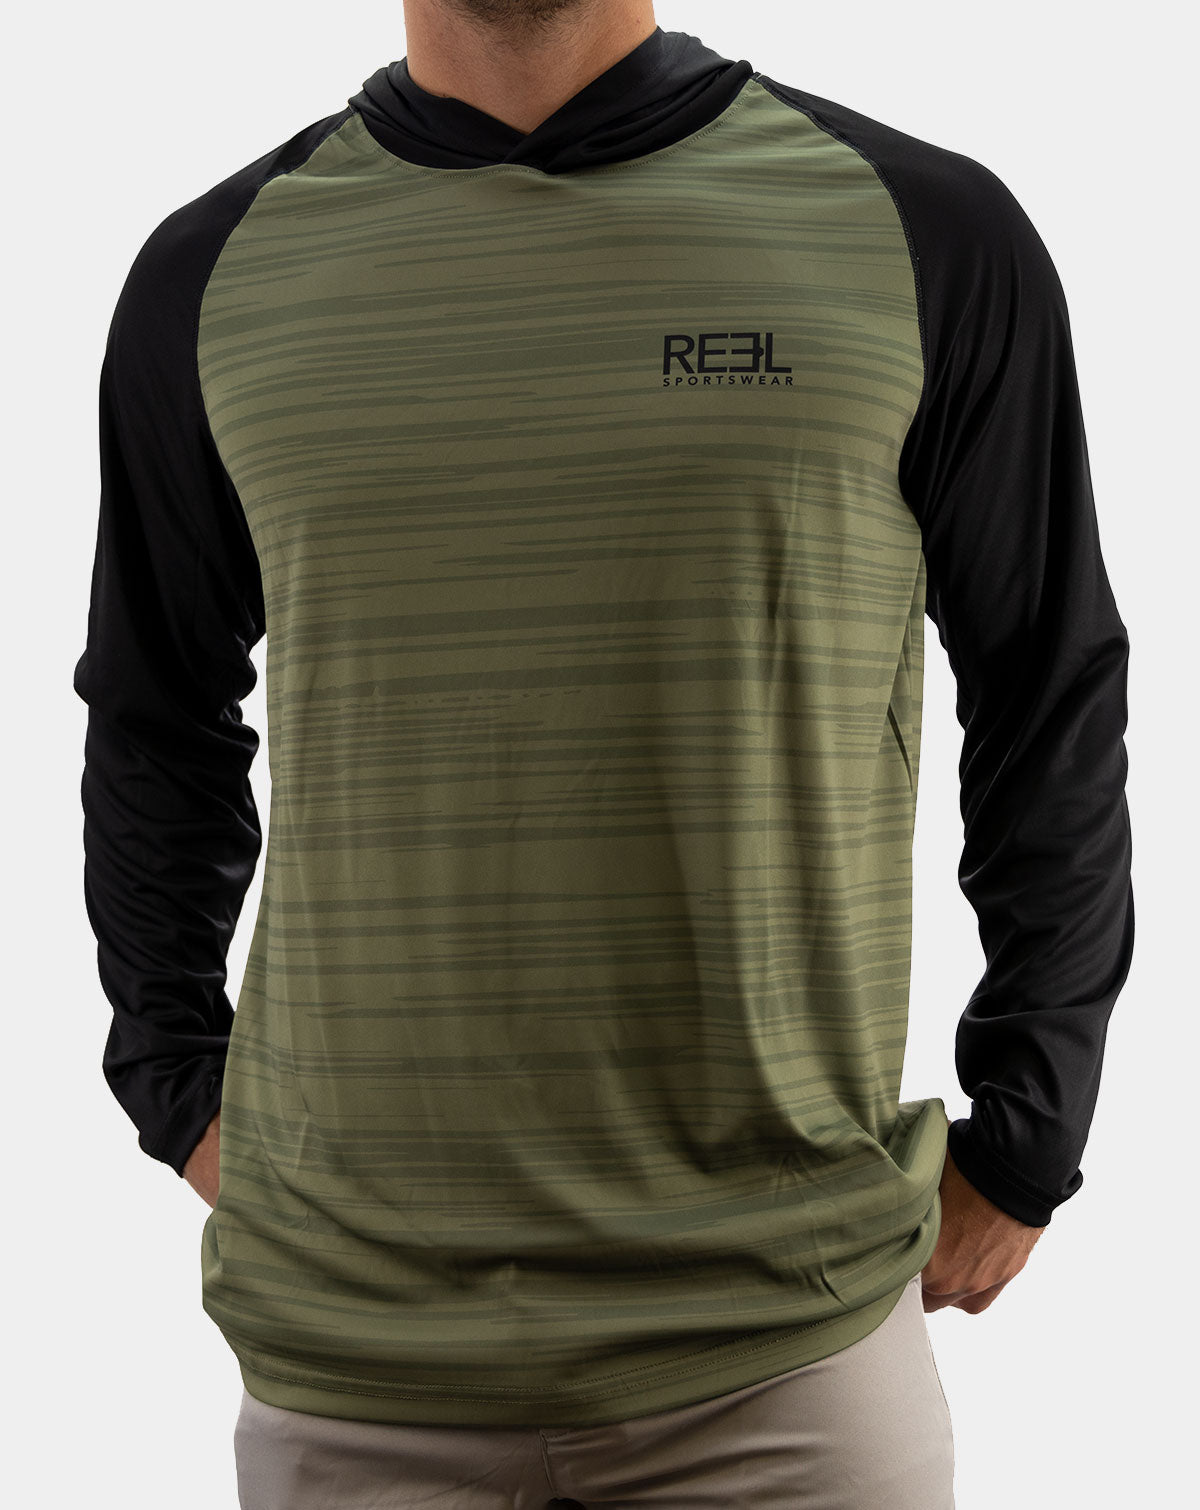 REEL LIFE Performance Long Sleeve Fishing/Sport Shirt (Us Men’s Size XXL)  NEW! 